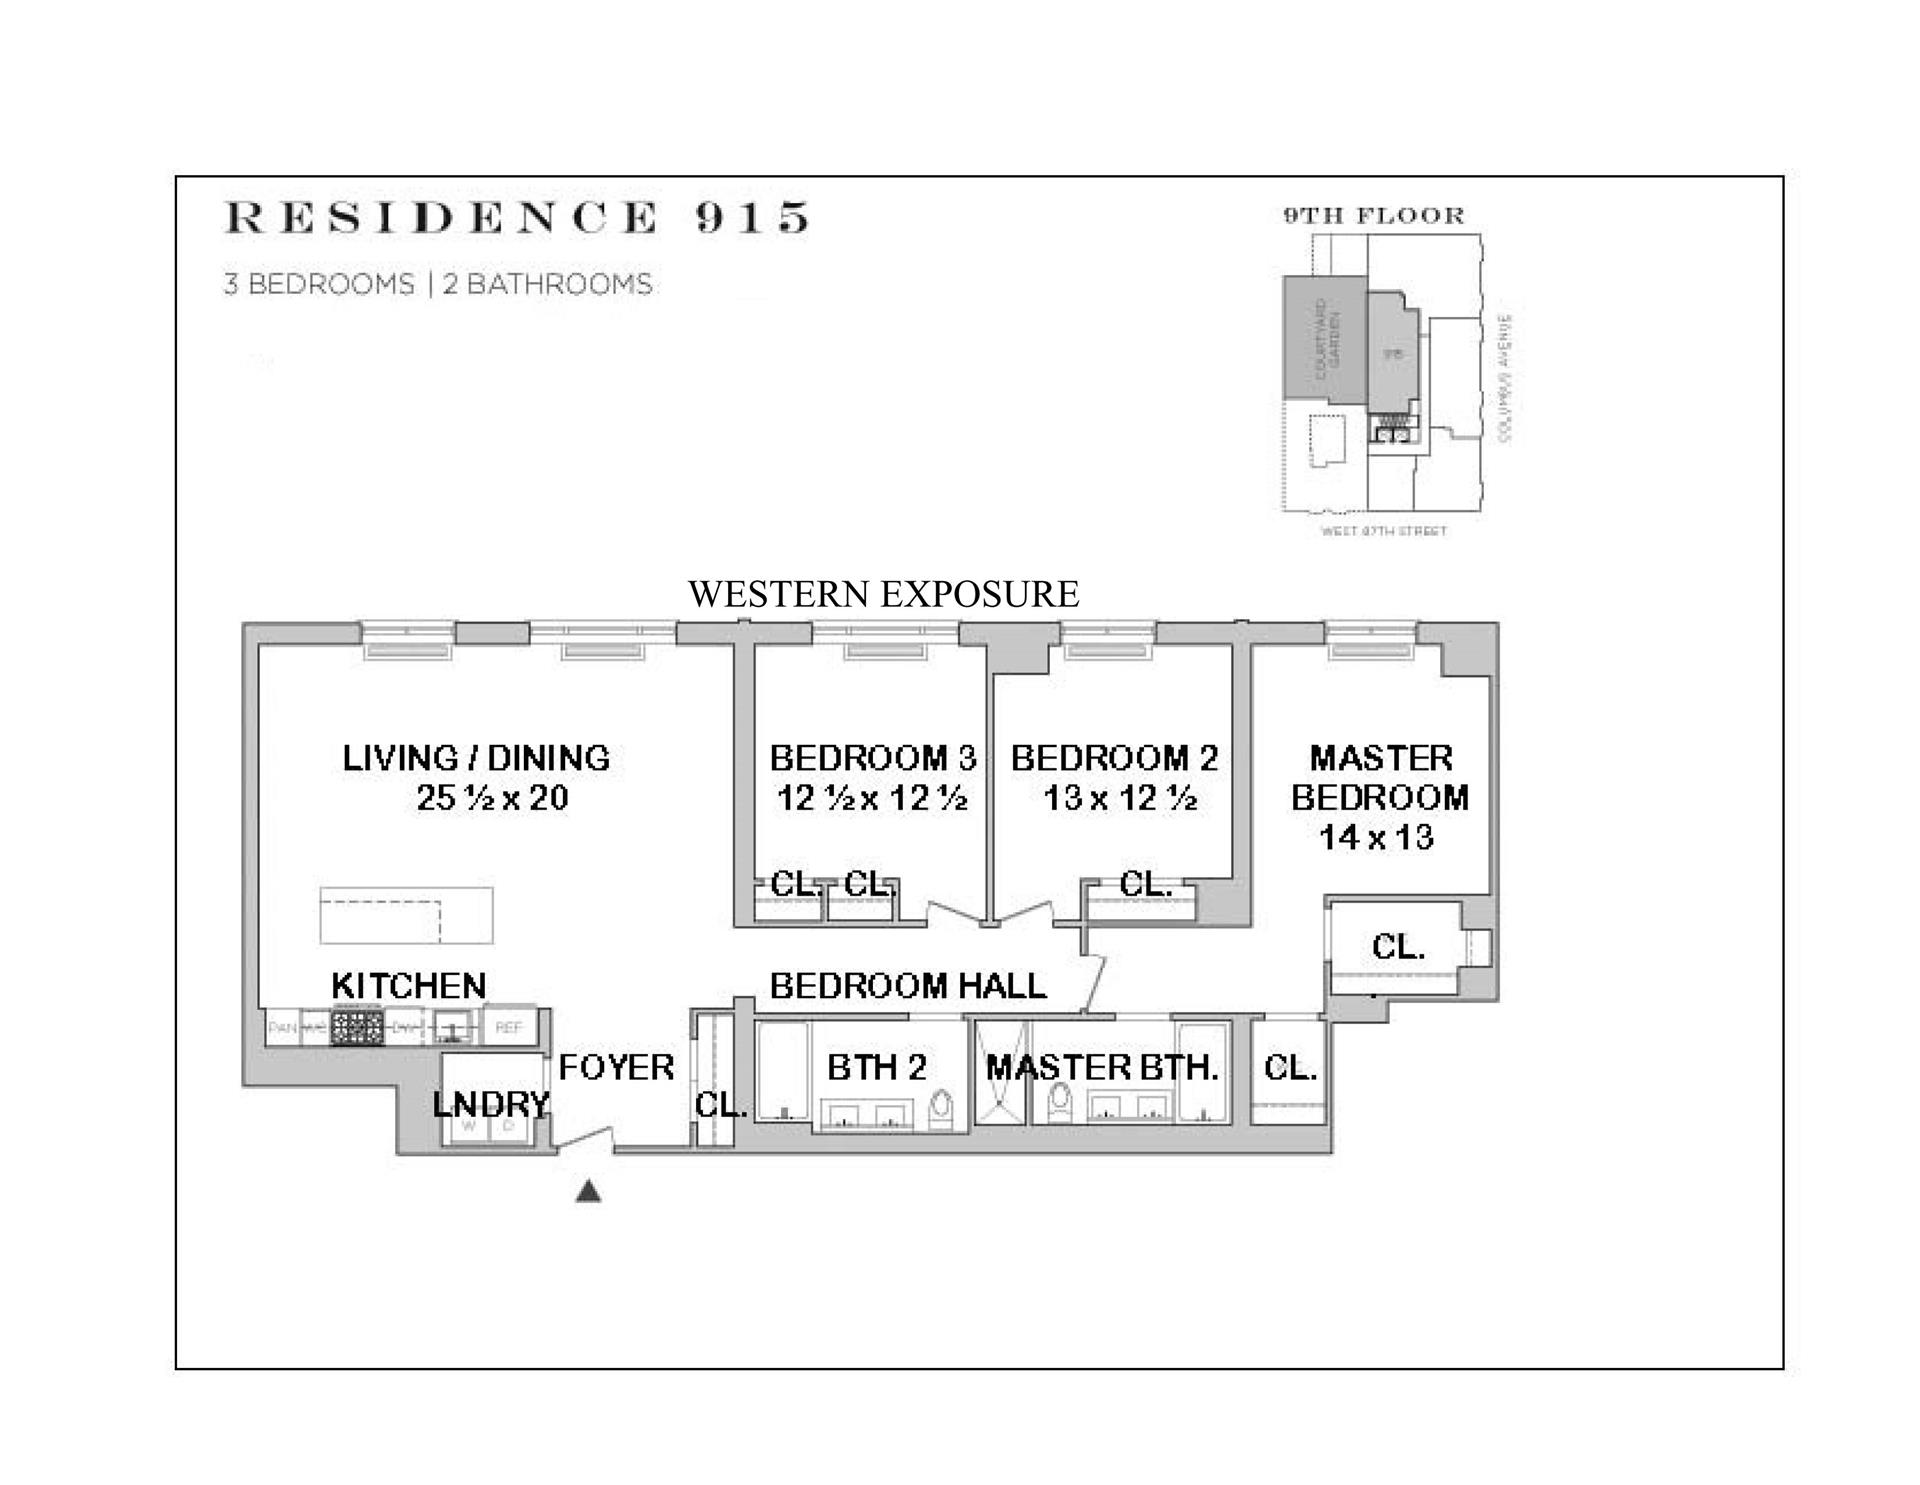 Floorplan for 101 West 87th Street, 915